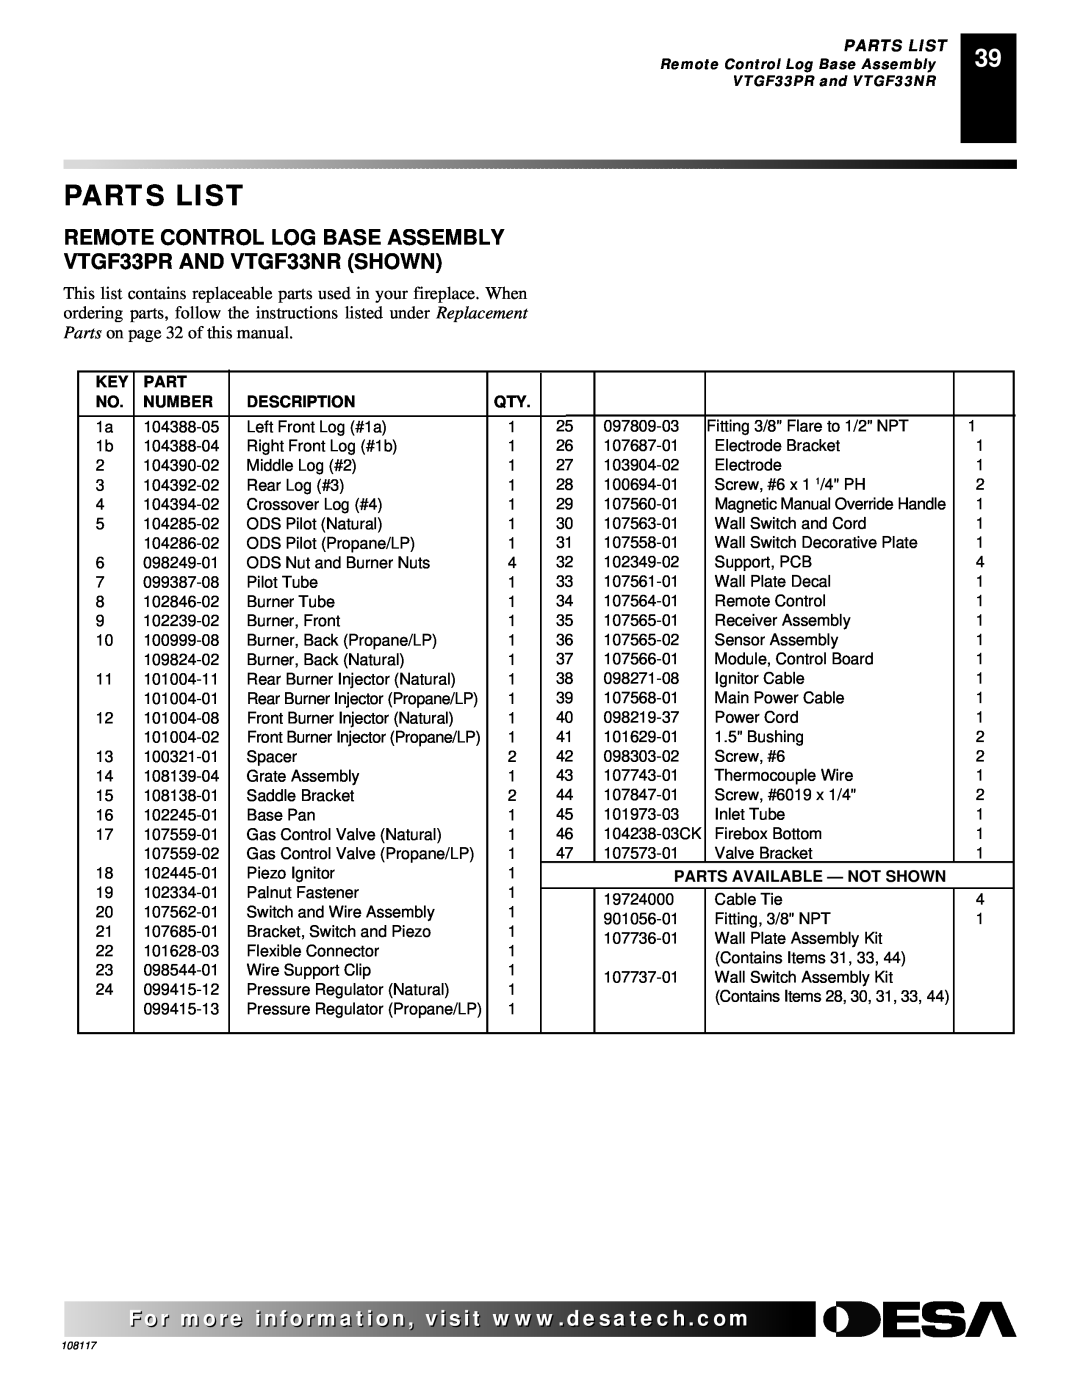 Desa VTGF33NR, VTGF33PR, CGEFP33PR installation manual Parts List, Number, Description, Parts Available - Not Shown 